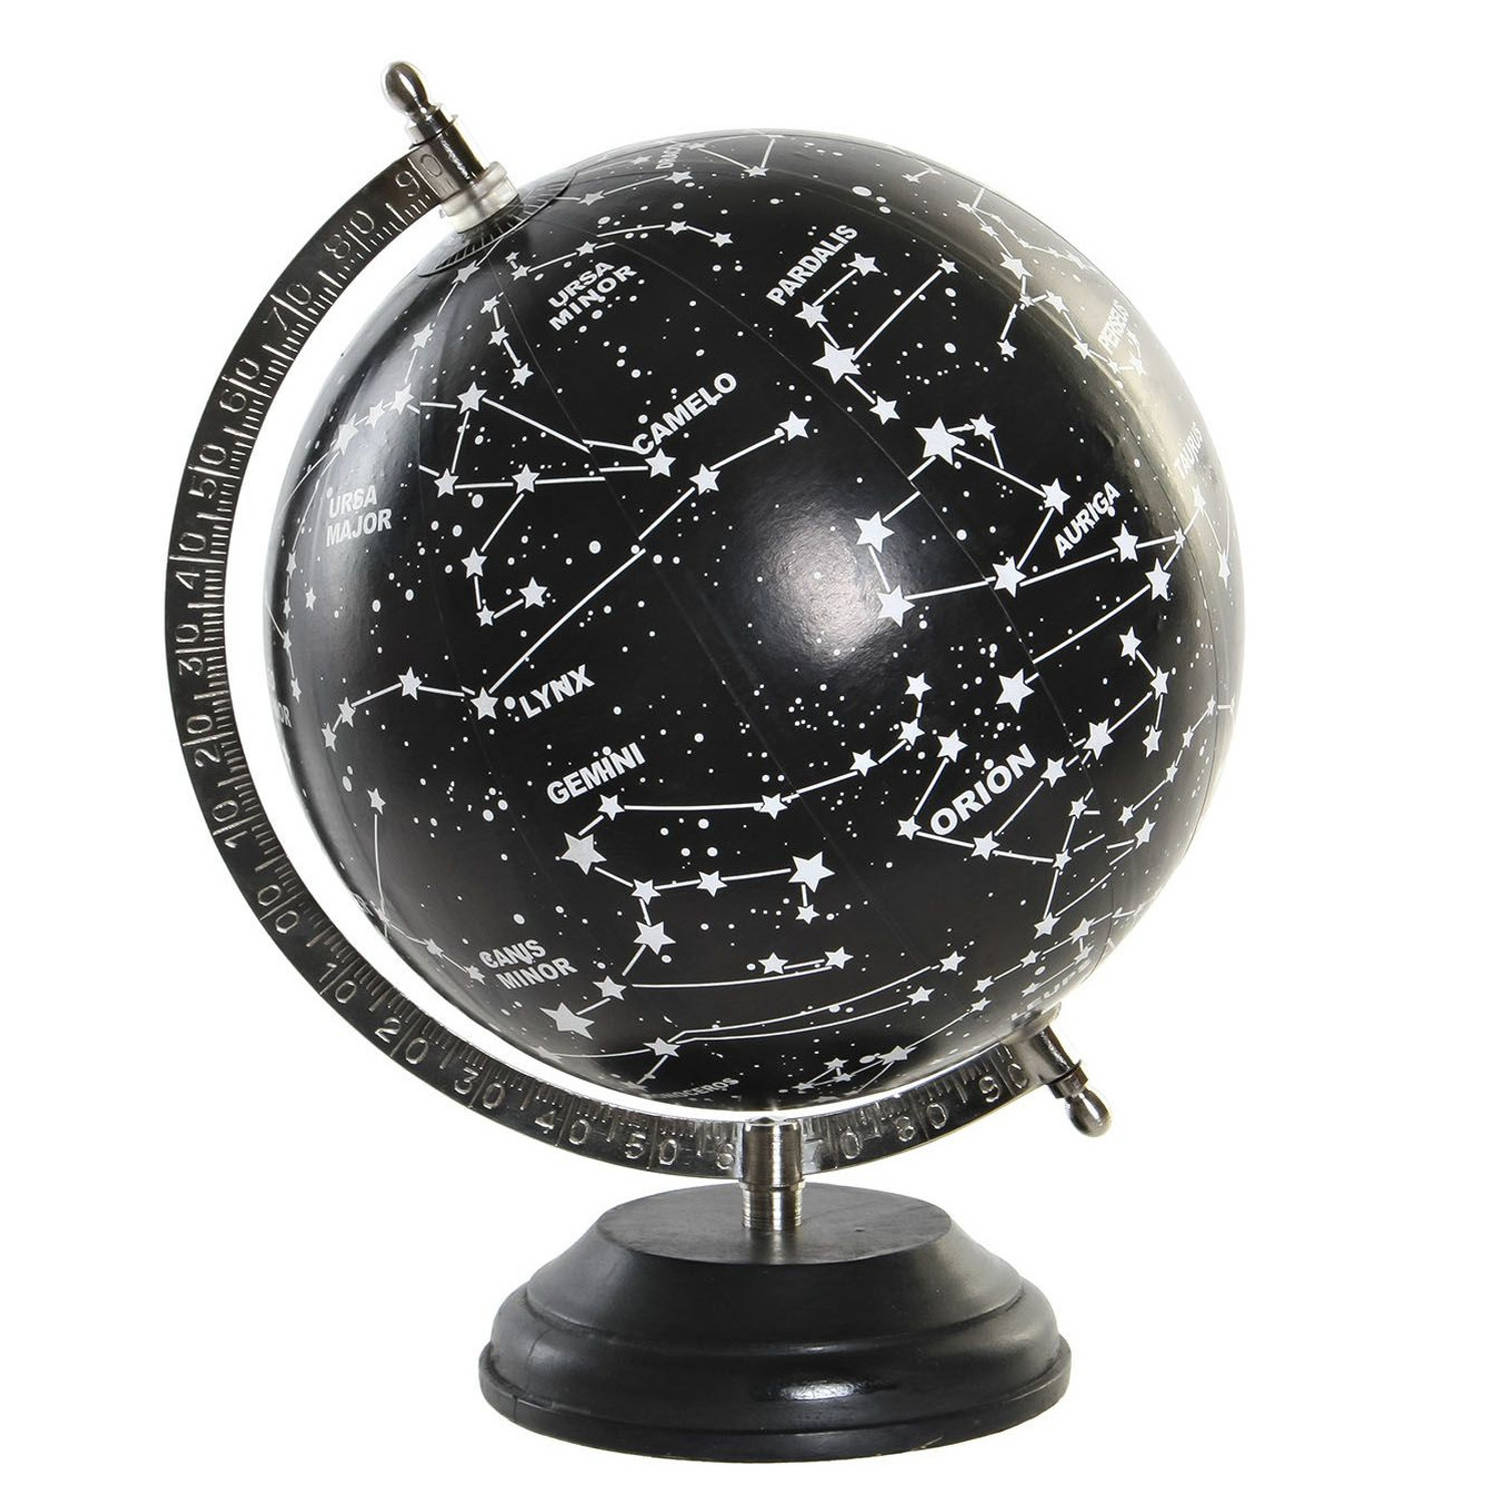 Decoratie wereldbol-globe sterrenhemel zwart op aluminium voet 28 x 22 cm Wereldbollen